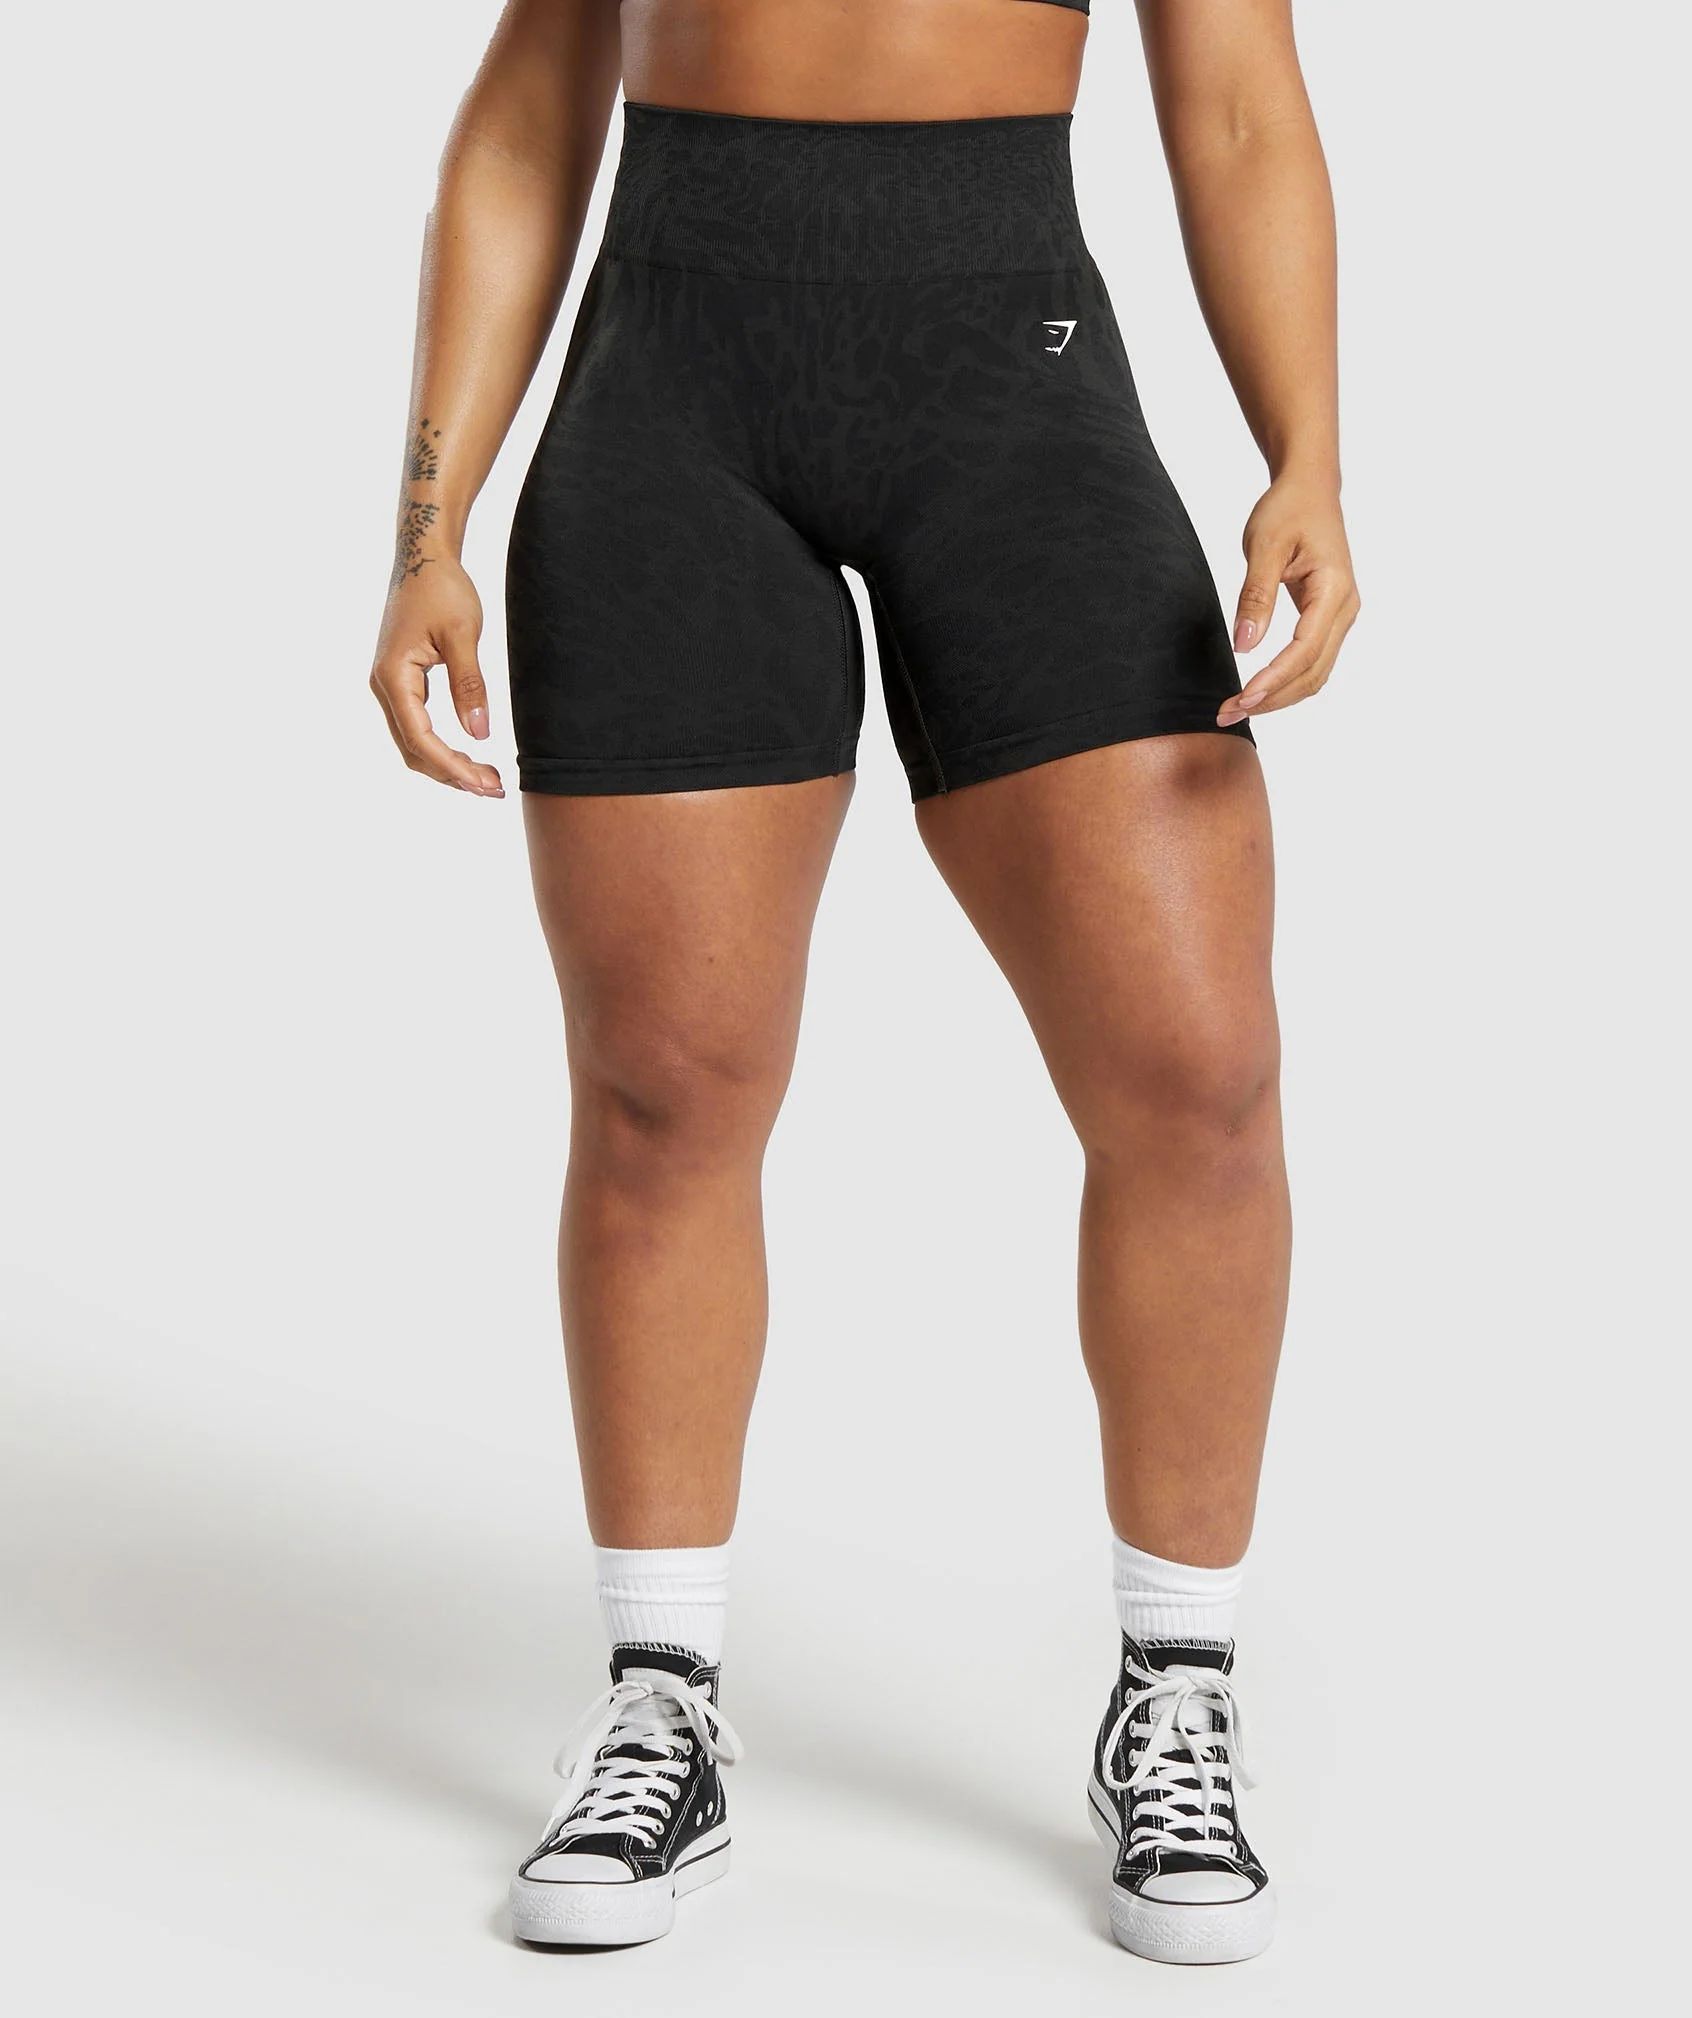 Gymshark Adapt Safari Tight Shorts - Black/Asphalt Grey | Gymshark US